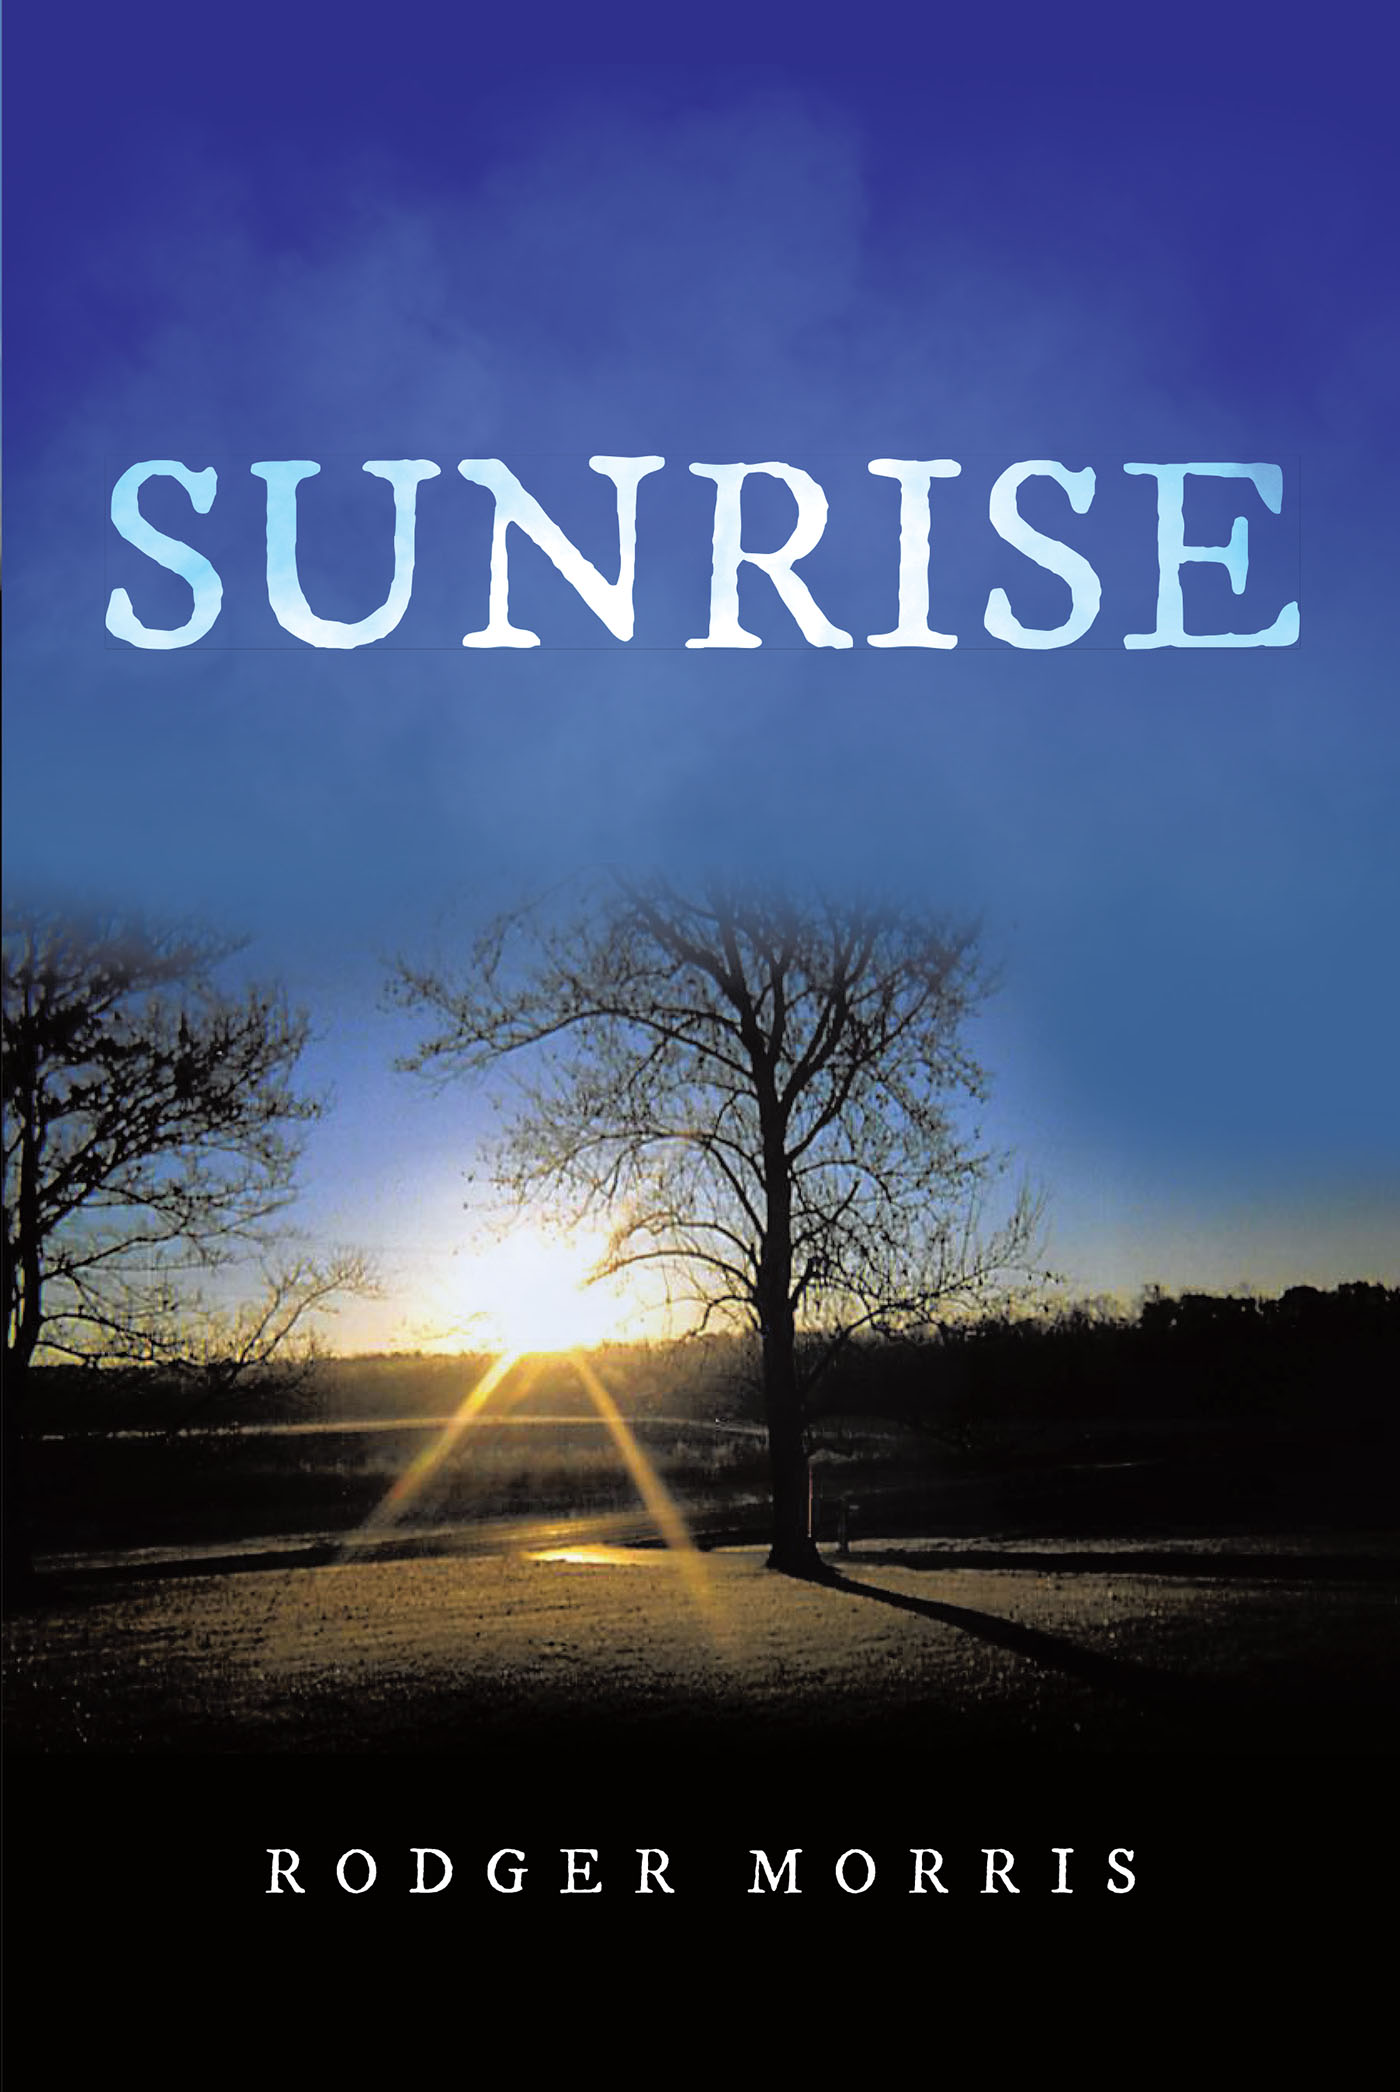 Sunrise Cover Image